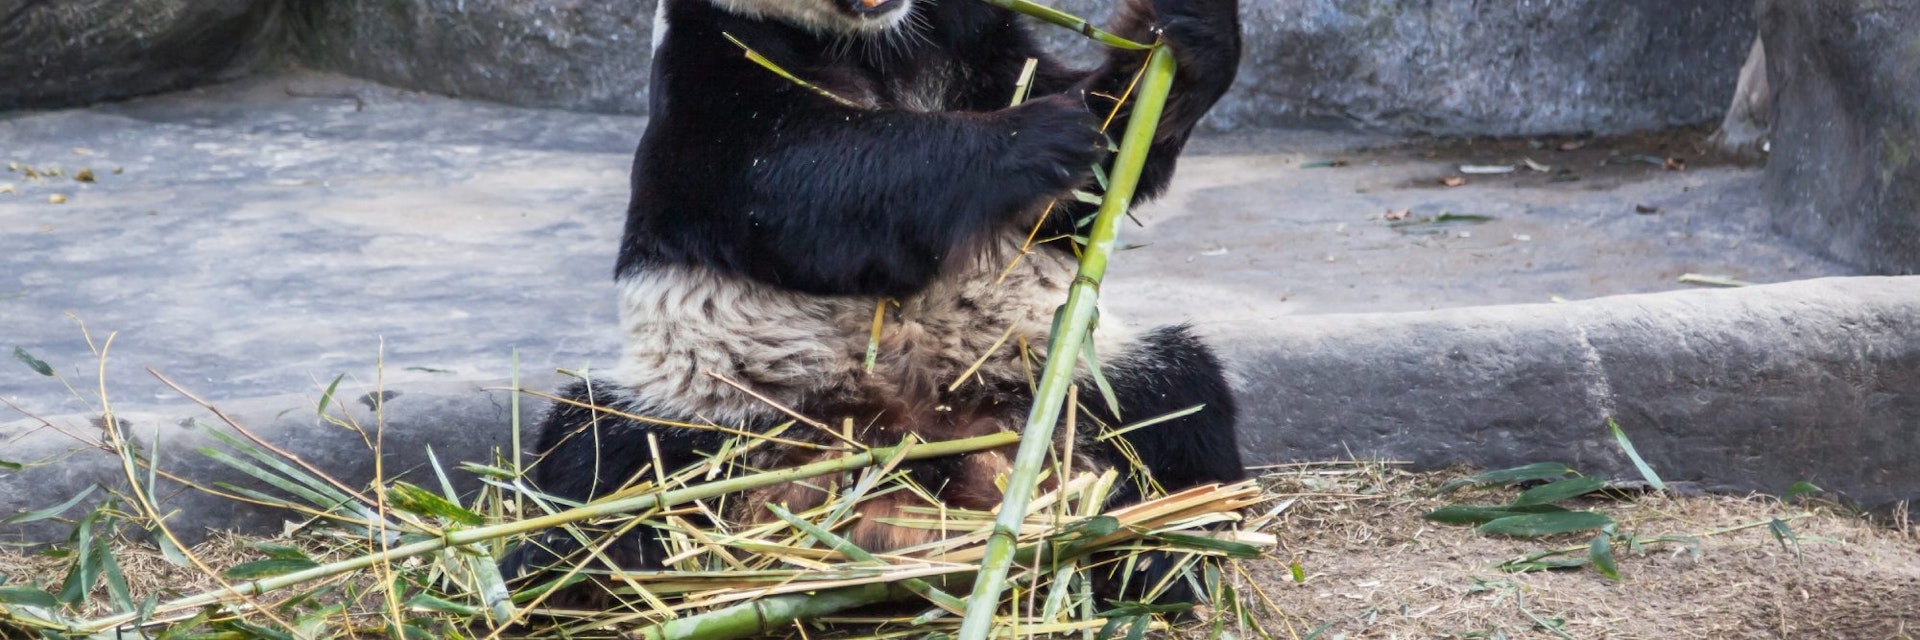 Toronto, Canada - March 12, 2016: Giant panda Da Mao eating bamboo in Toronto Zoo, Canada.  ; Shutterstock ID 1023482665; your: Bridget Brown; gl: 65050; netsuite: Online Editorial; full: POI Image Update